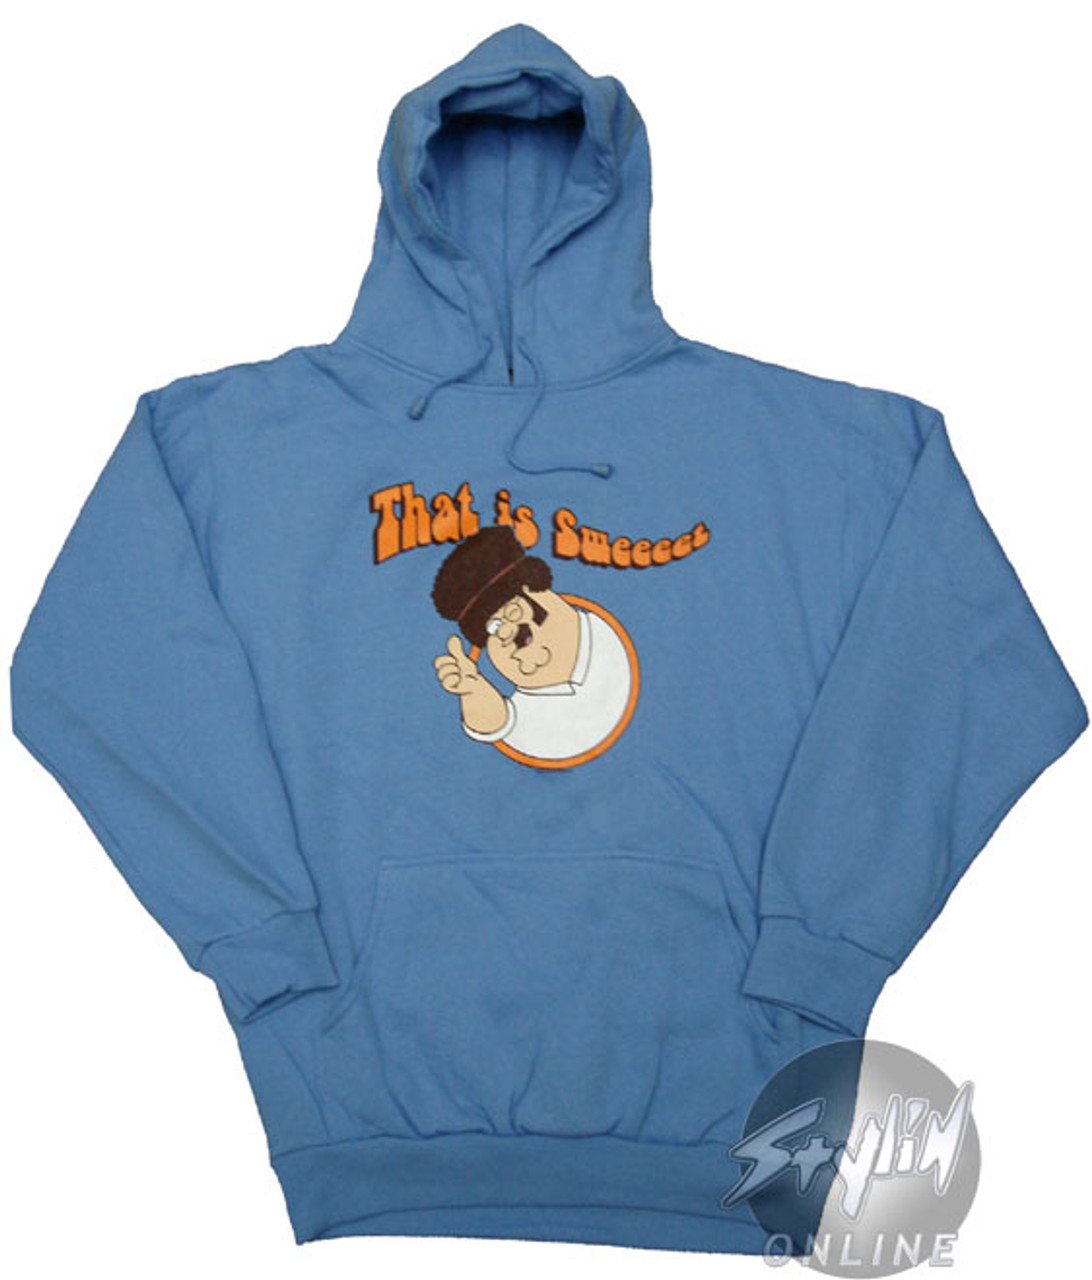 family guy portrait hoodie 3 42619.1 - Family Guy Shop